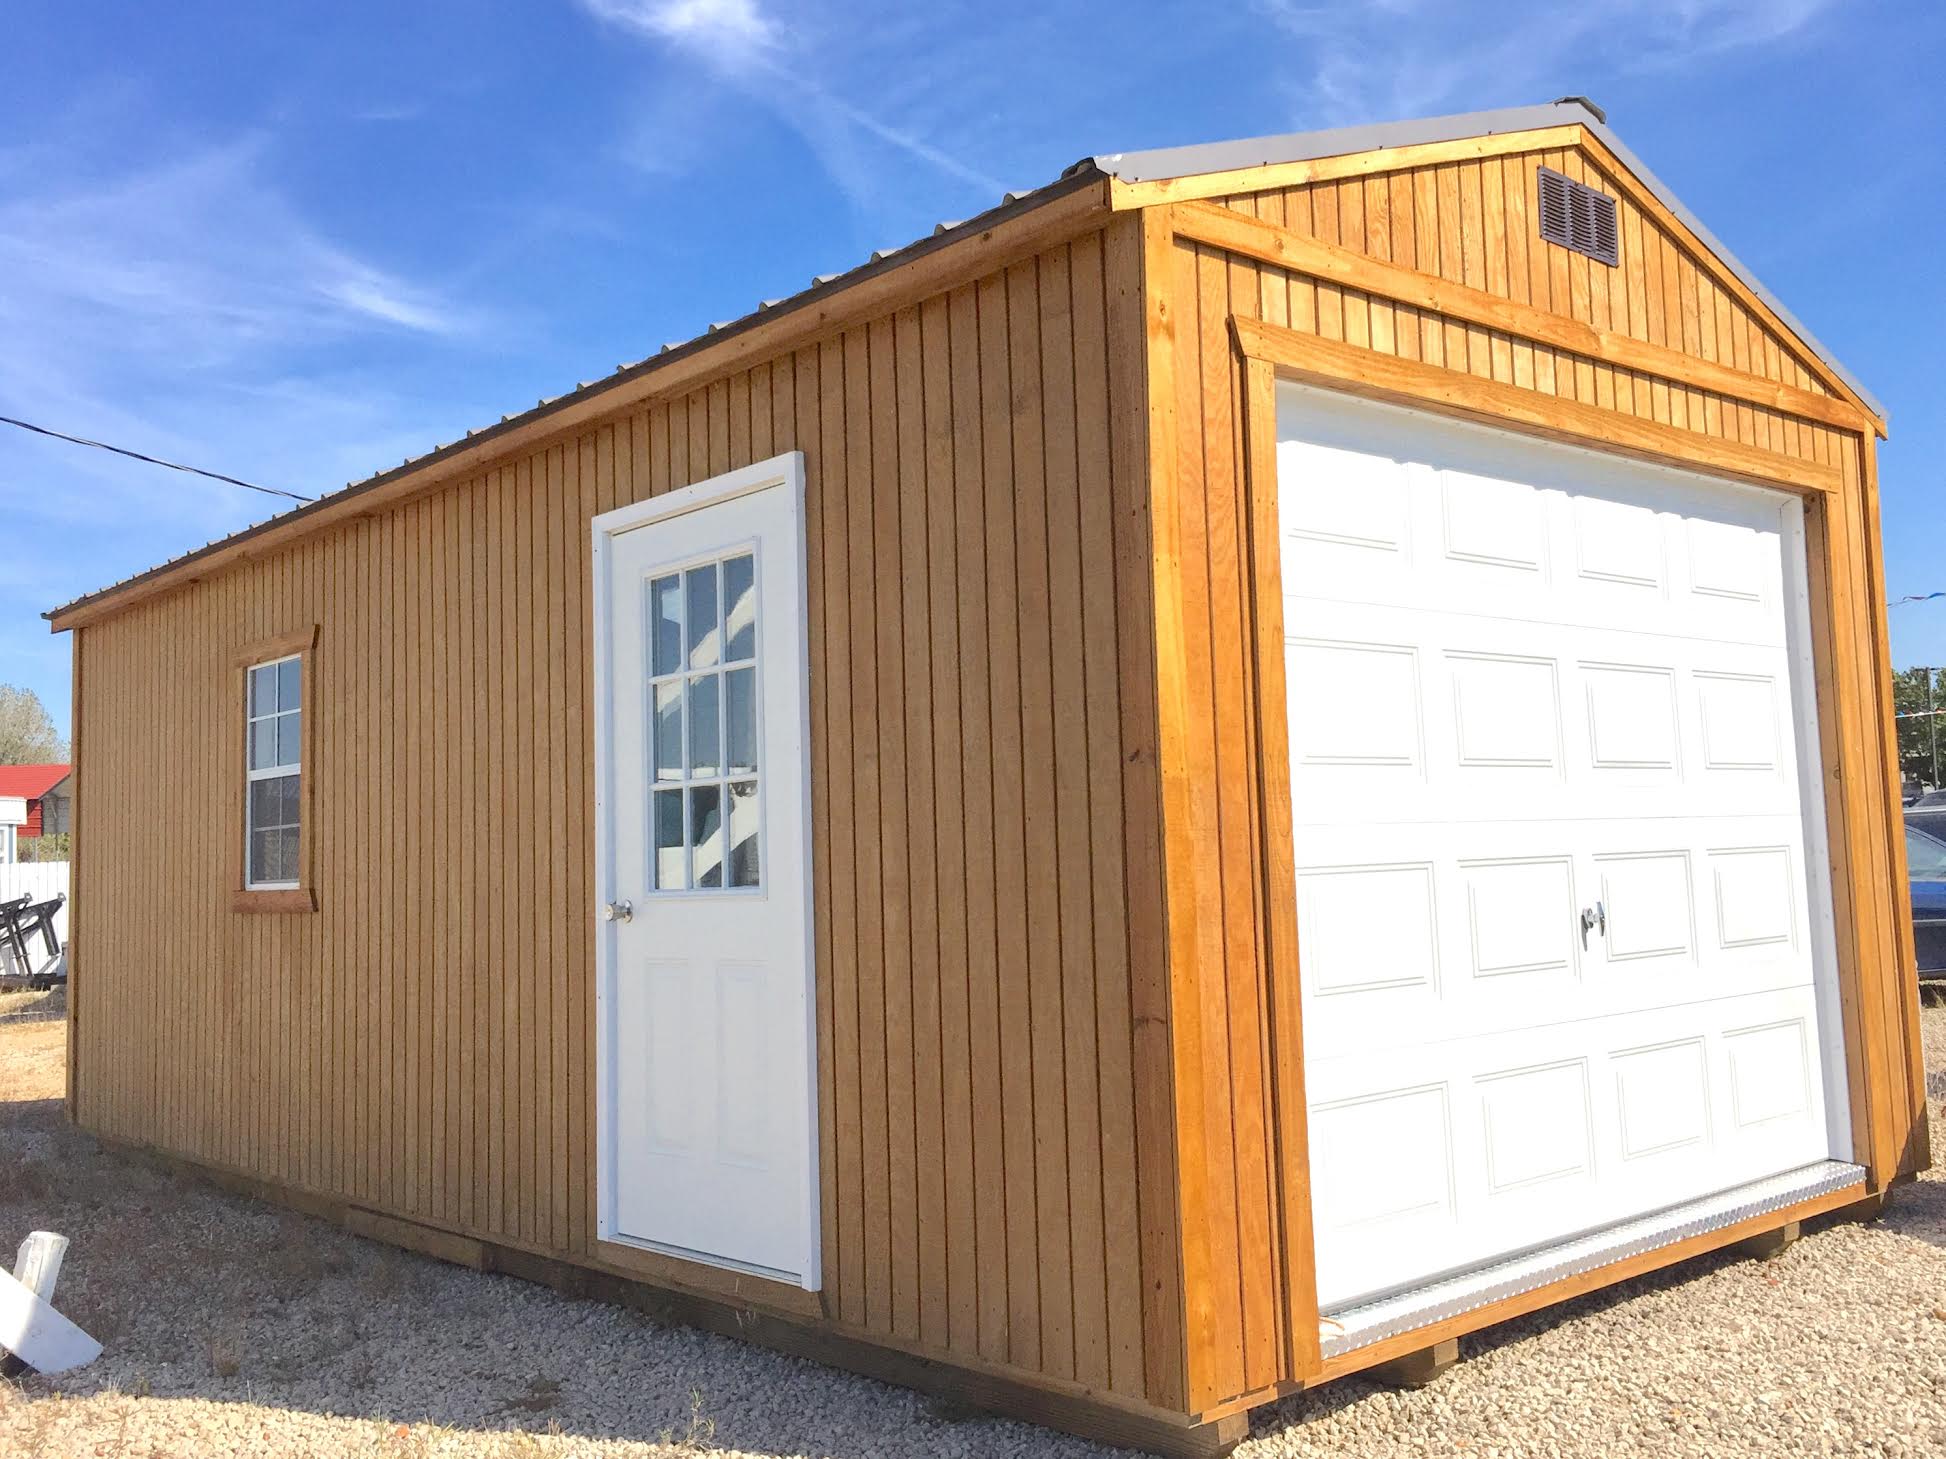 Treated light wood garage with white doors